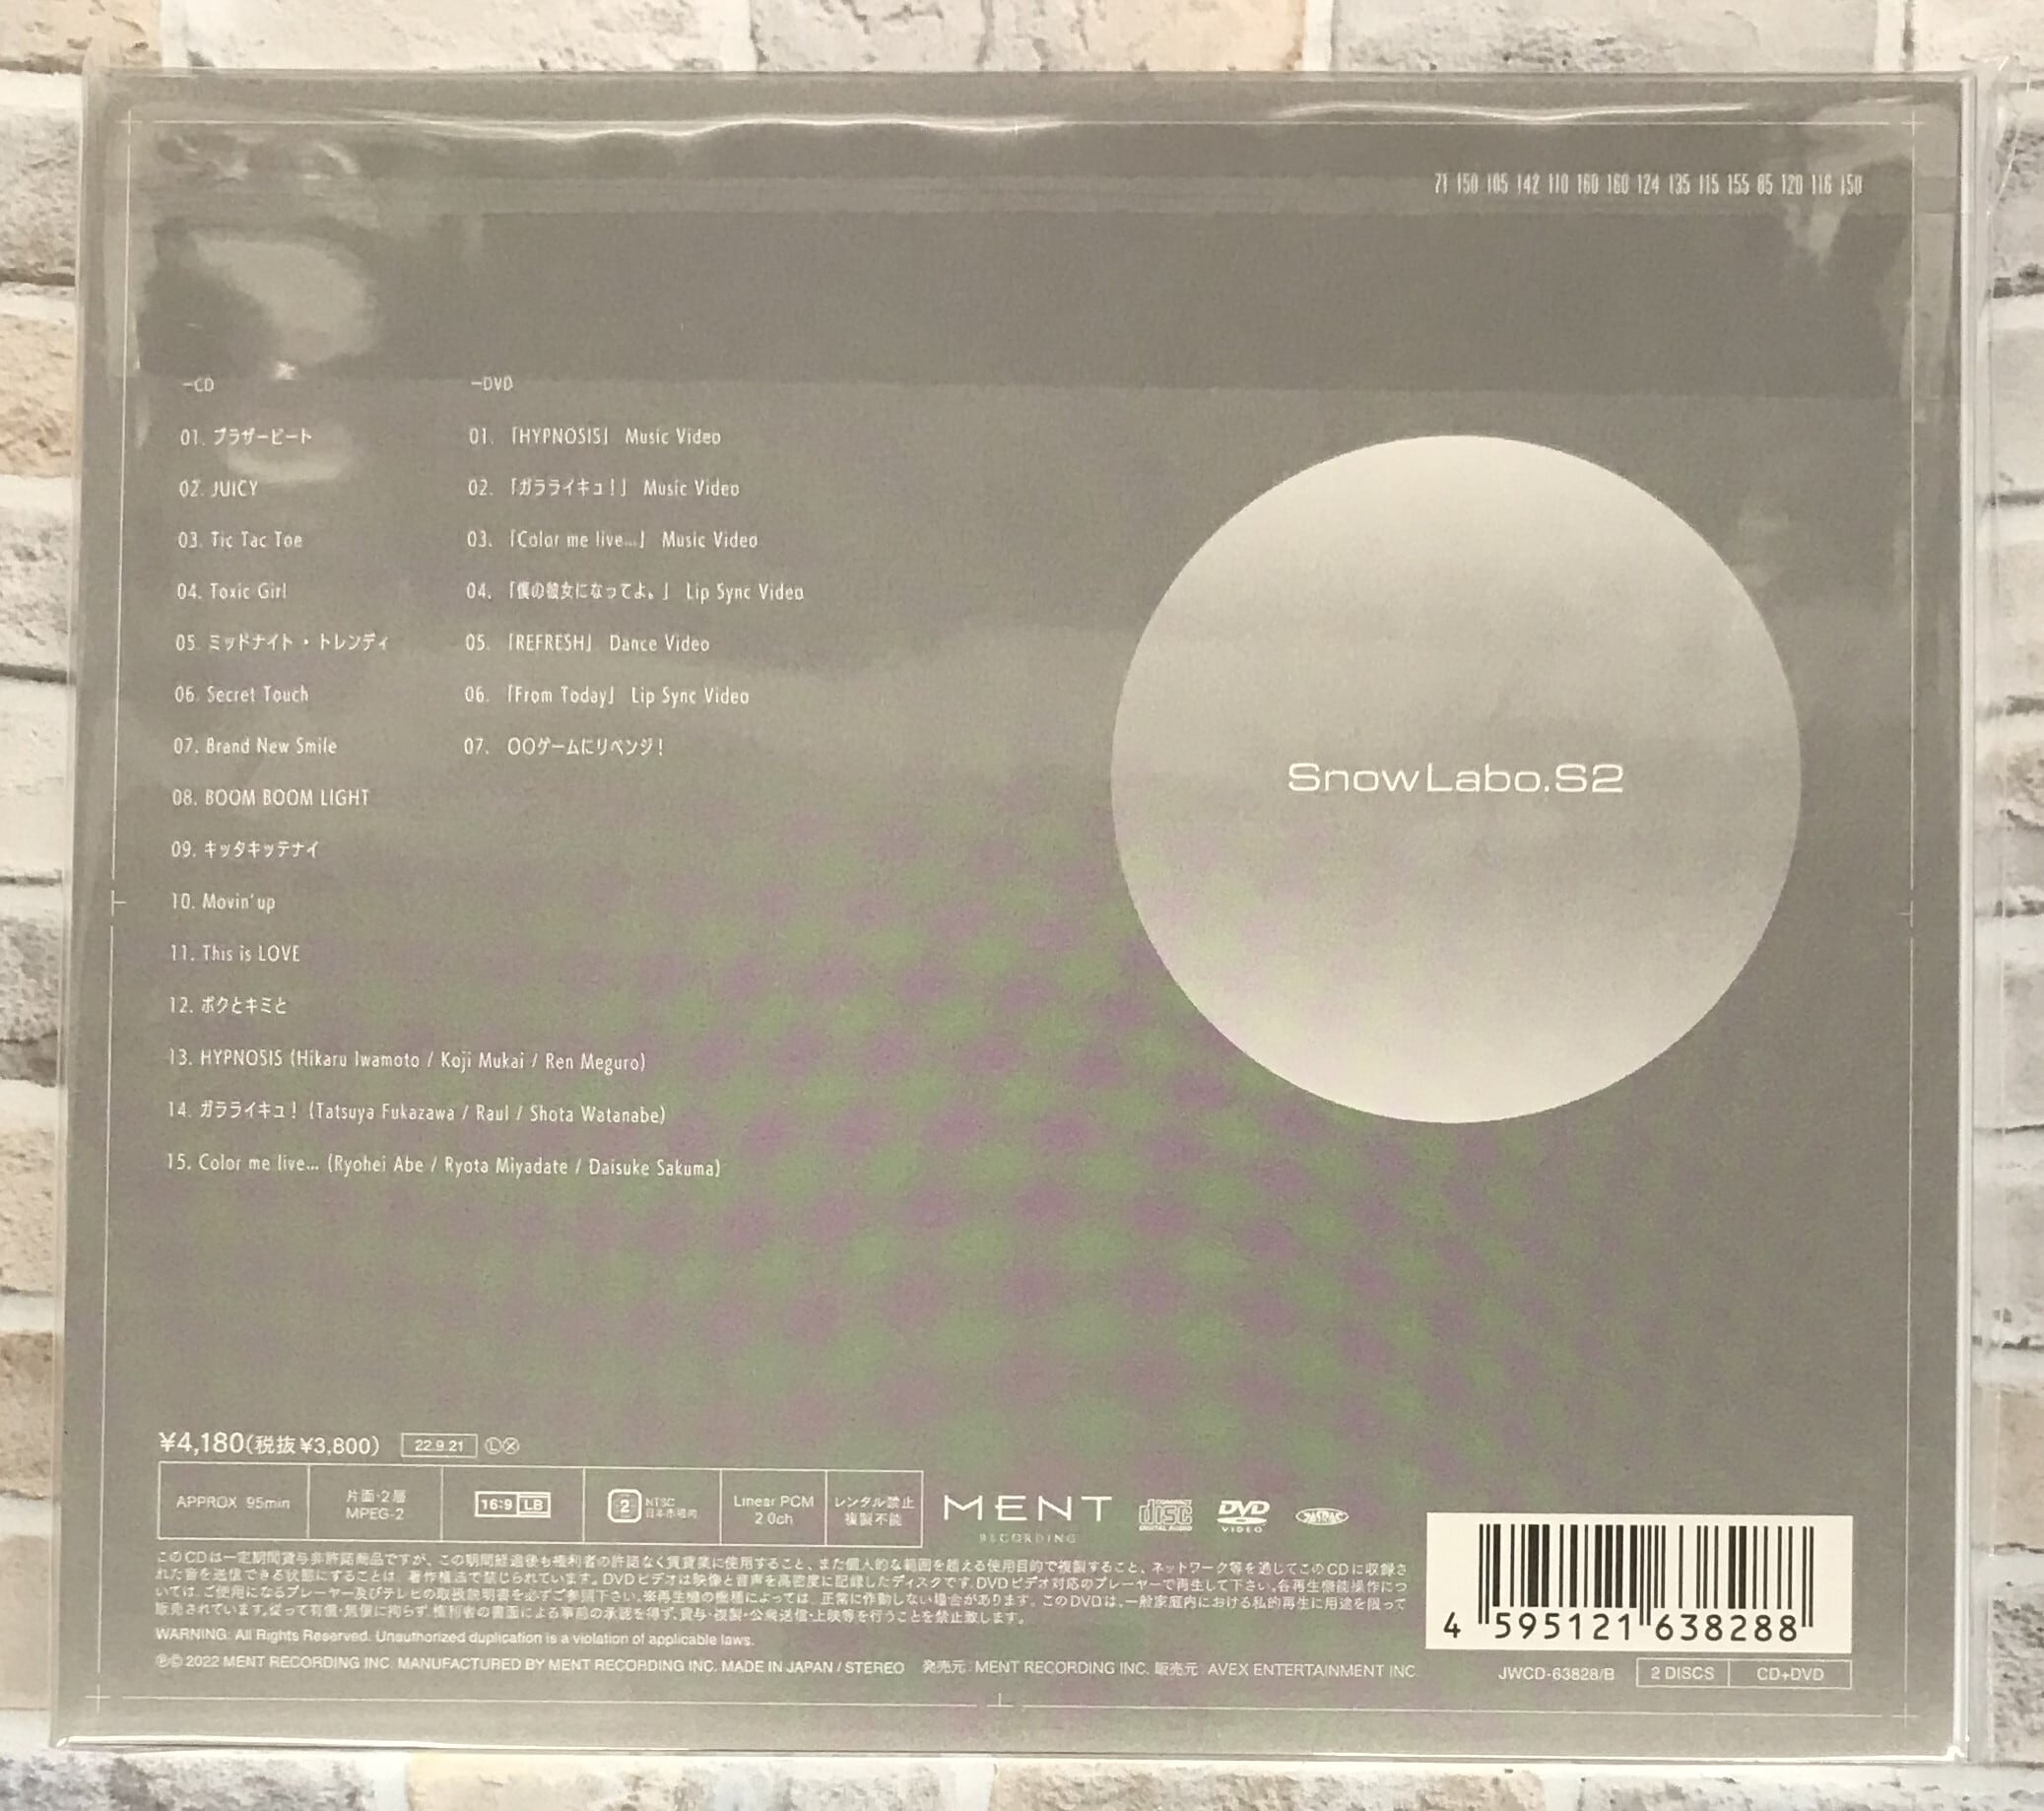 Ｓｎｏｗ Ｍａｎ / Ｓｎｏｗ Ｌａｂｏ． Ｓ２ / 初回盤B (CD+DVD 